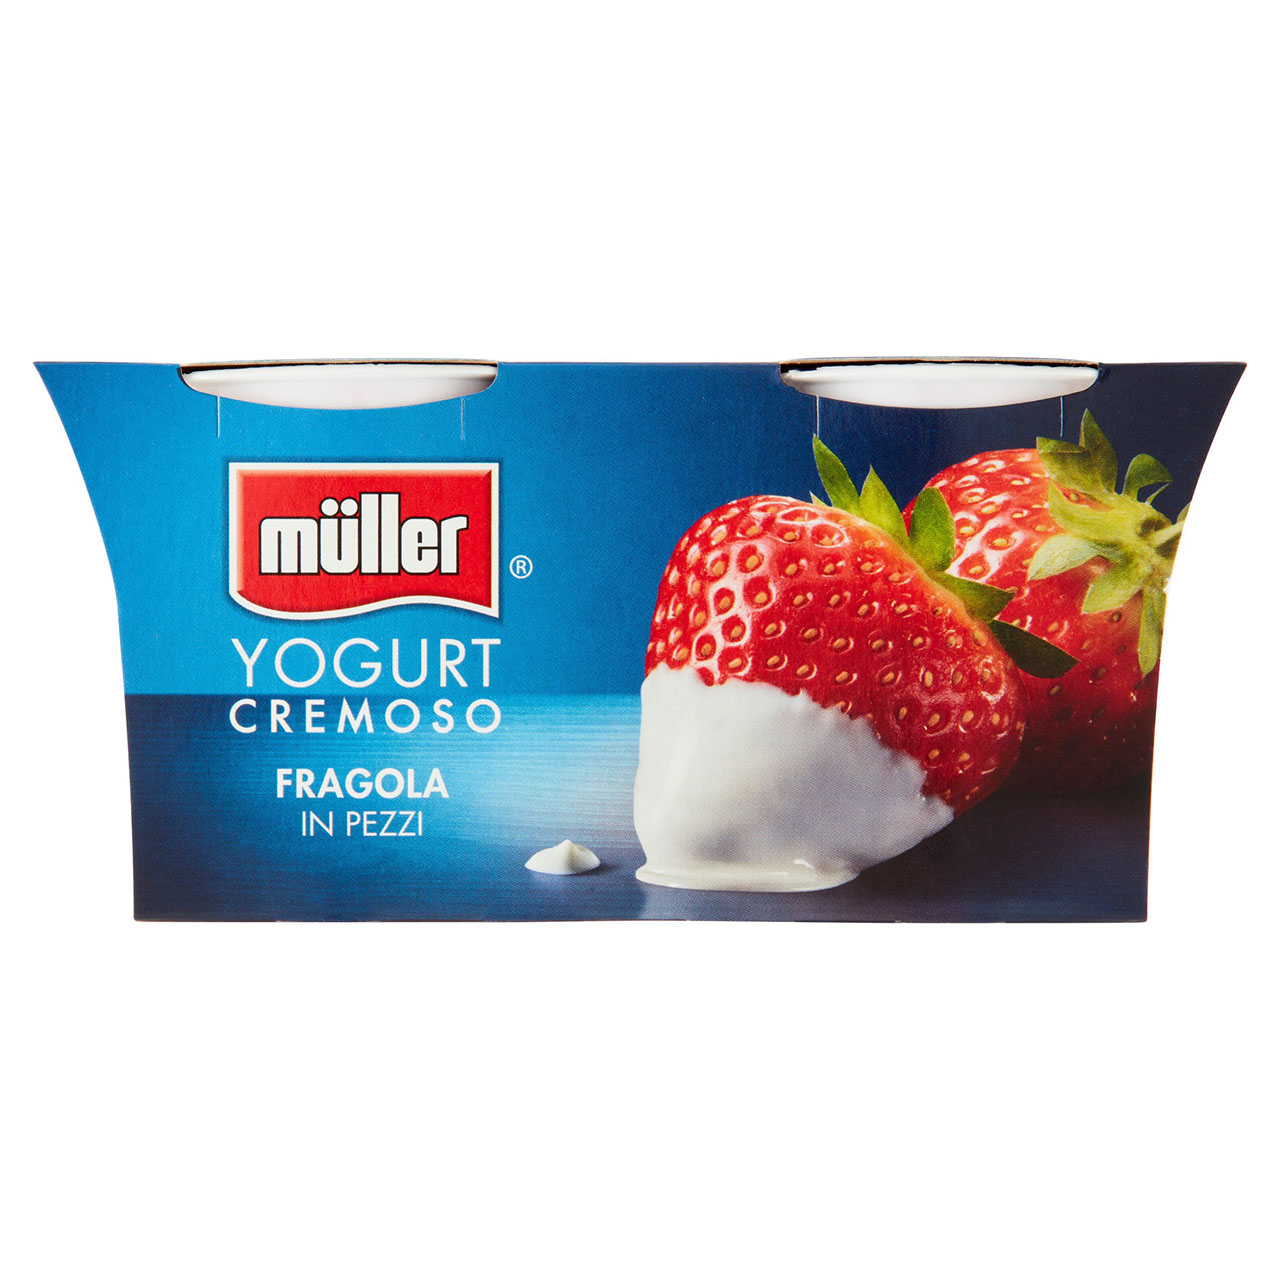 Müller Yogurt Cremoso Fragola in Pezzi 2x125g